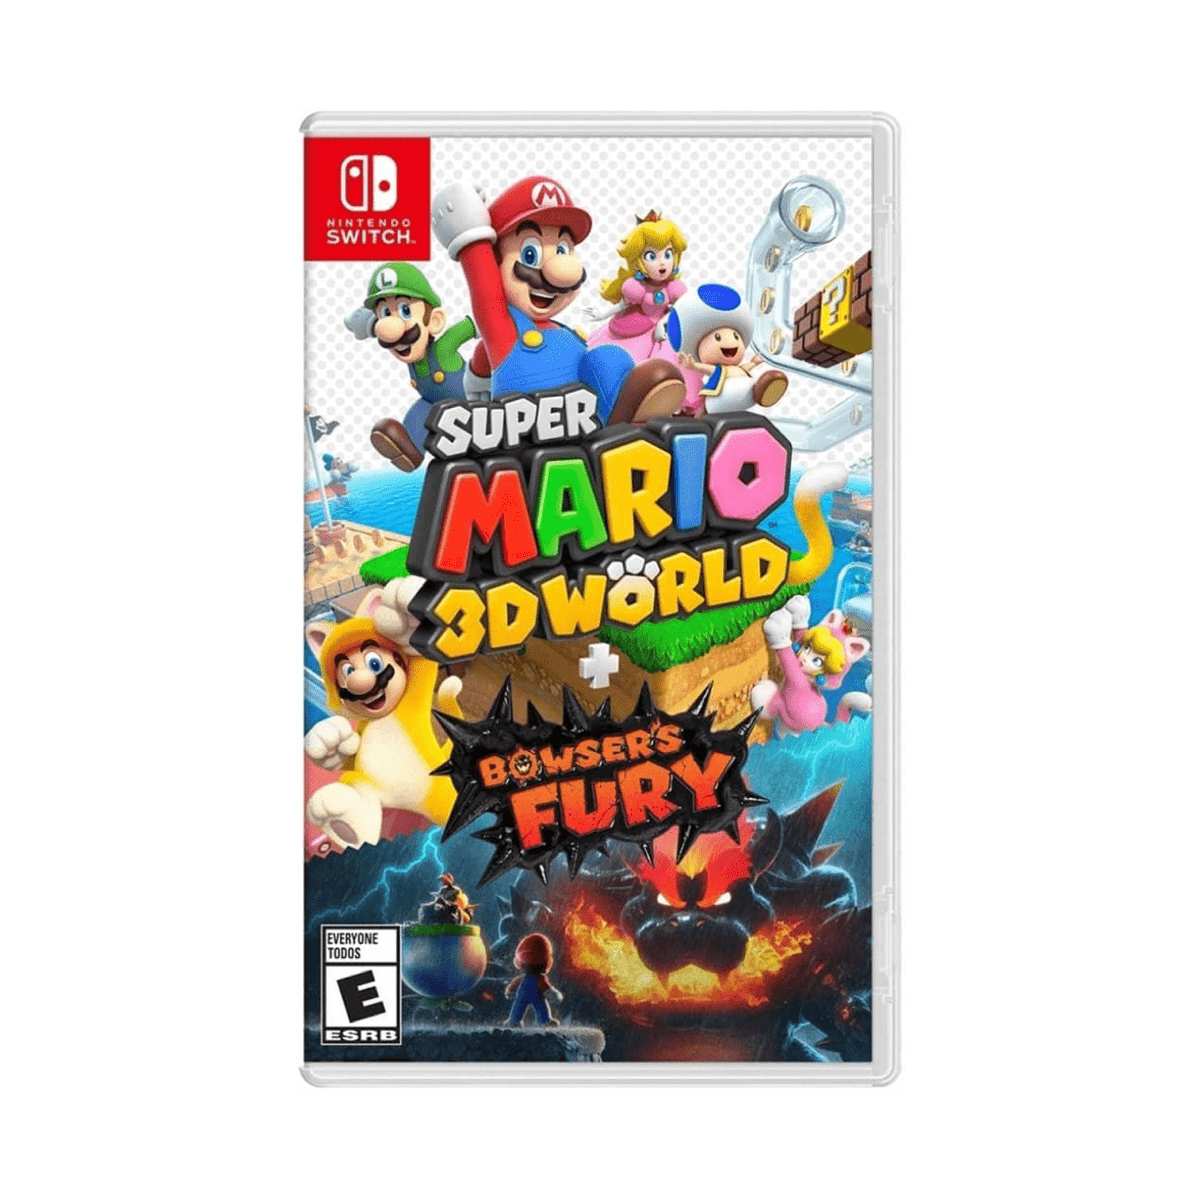 Super Mario 3D World Plus Bowser's Fury - Nintendo Switch